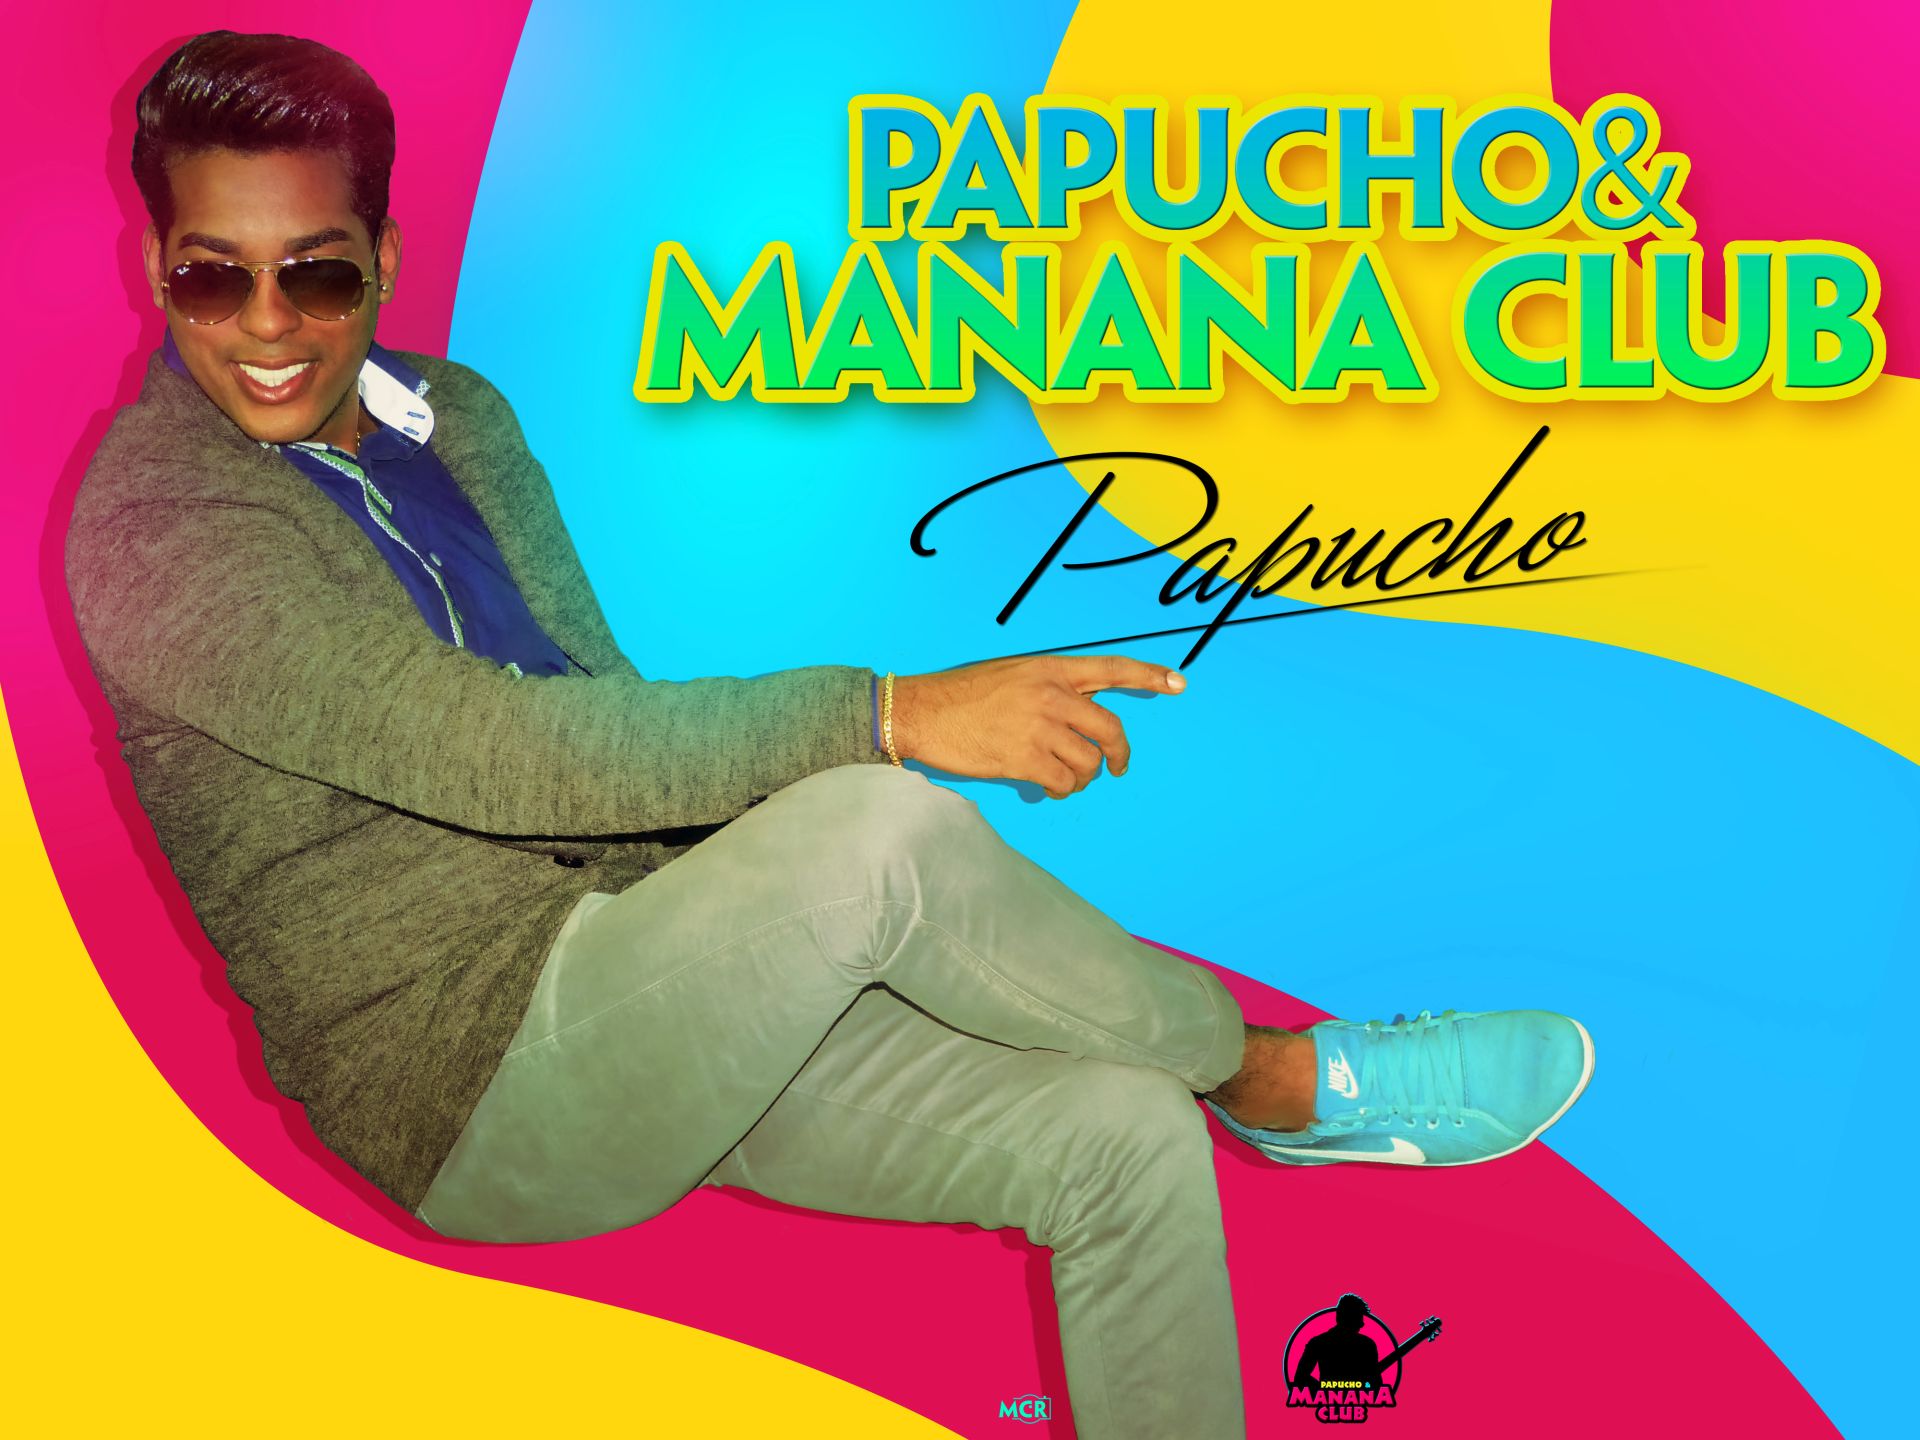 Manana Club Y Papucho_papucho10b.jpg